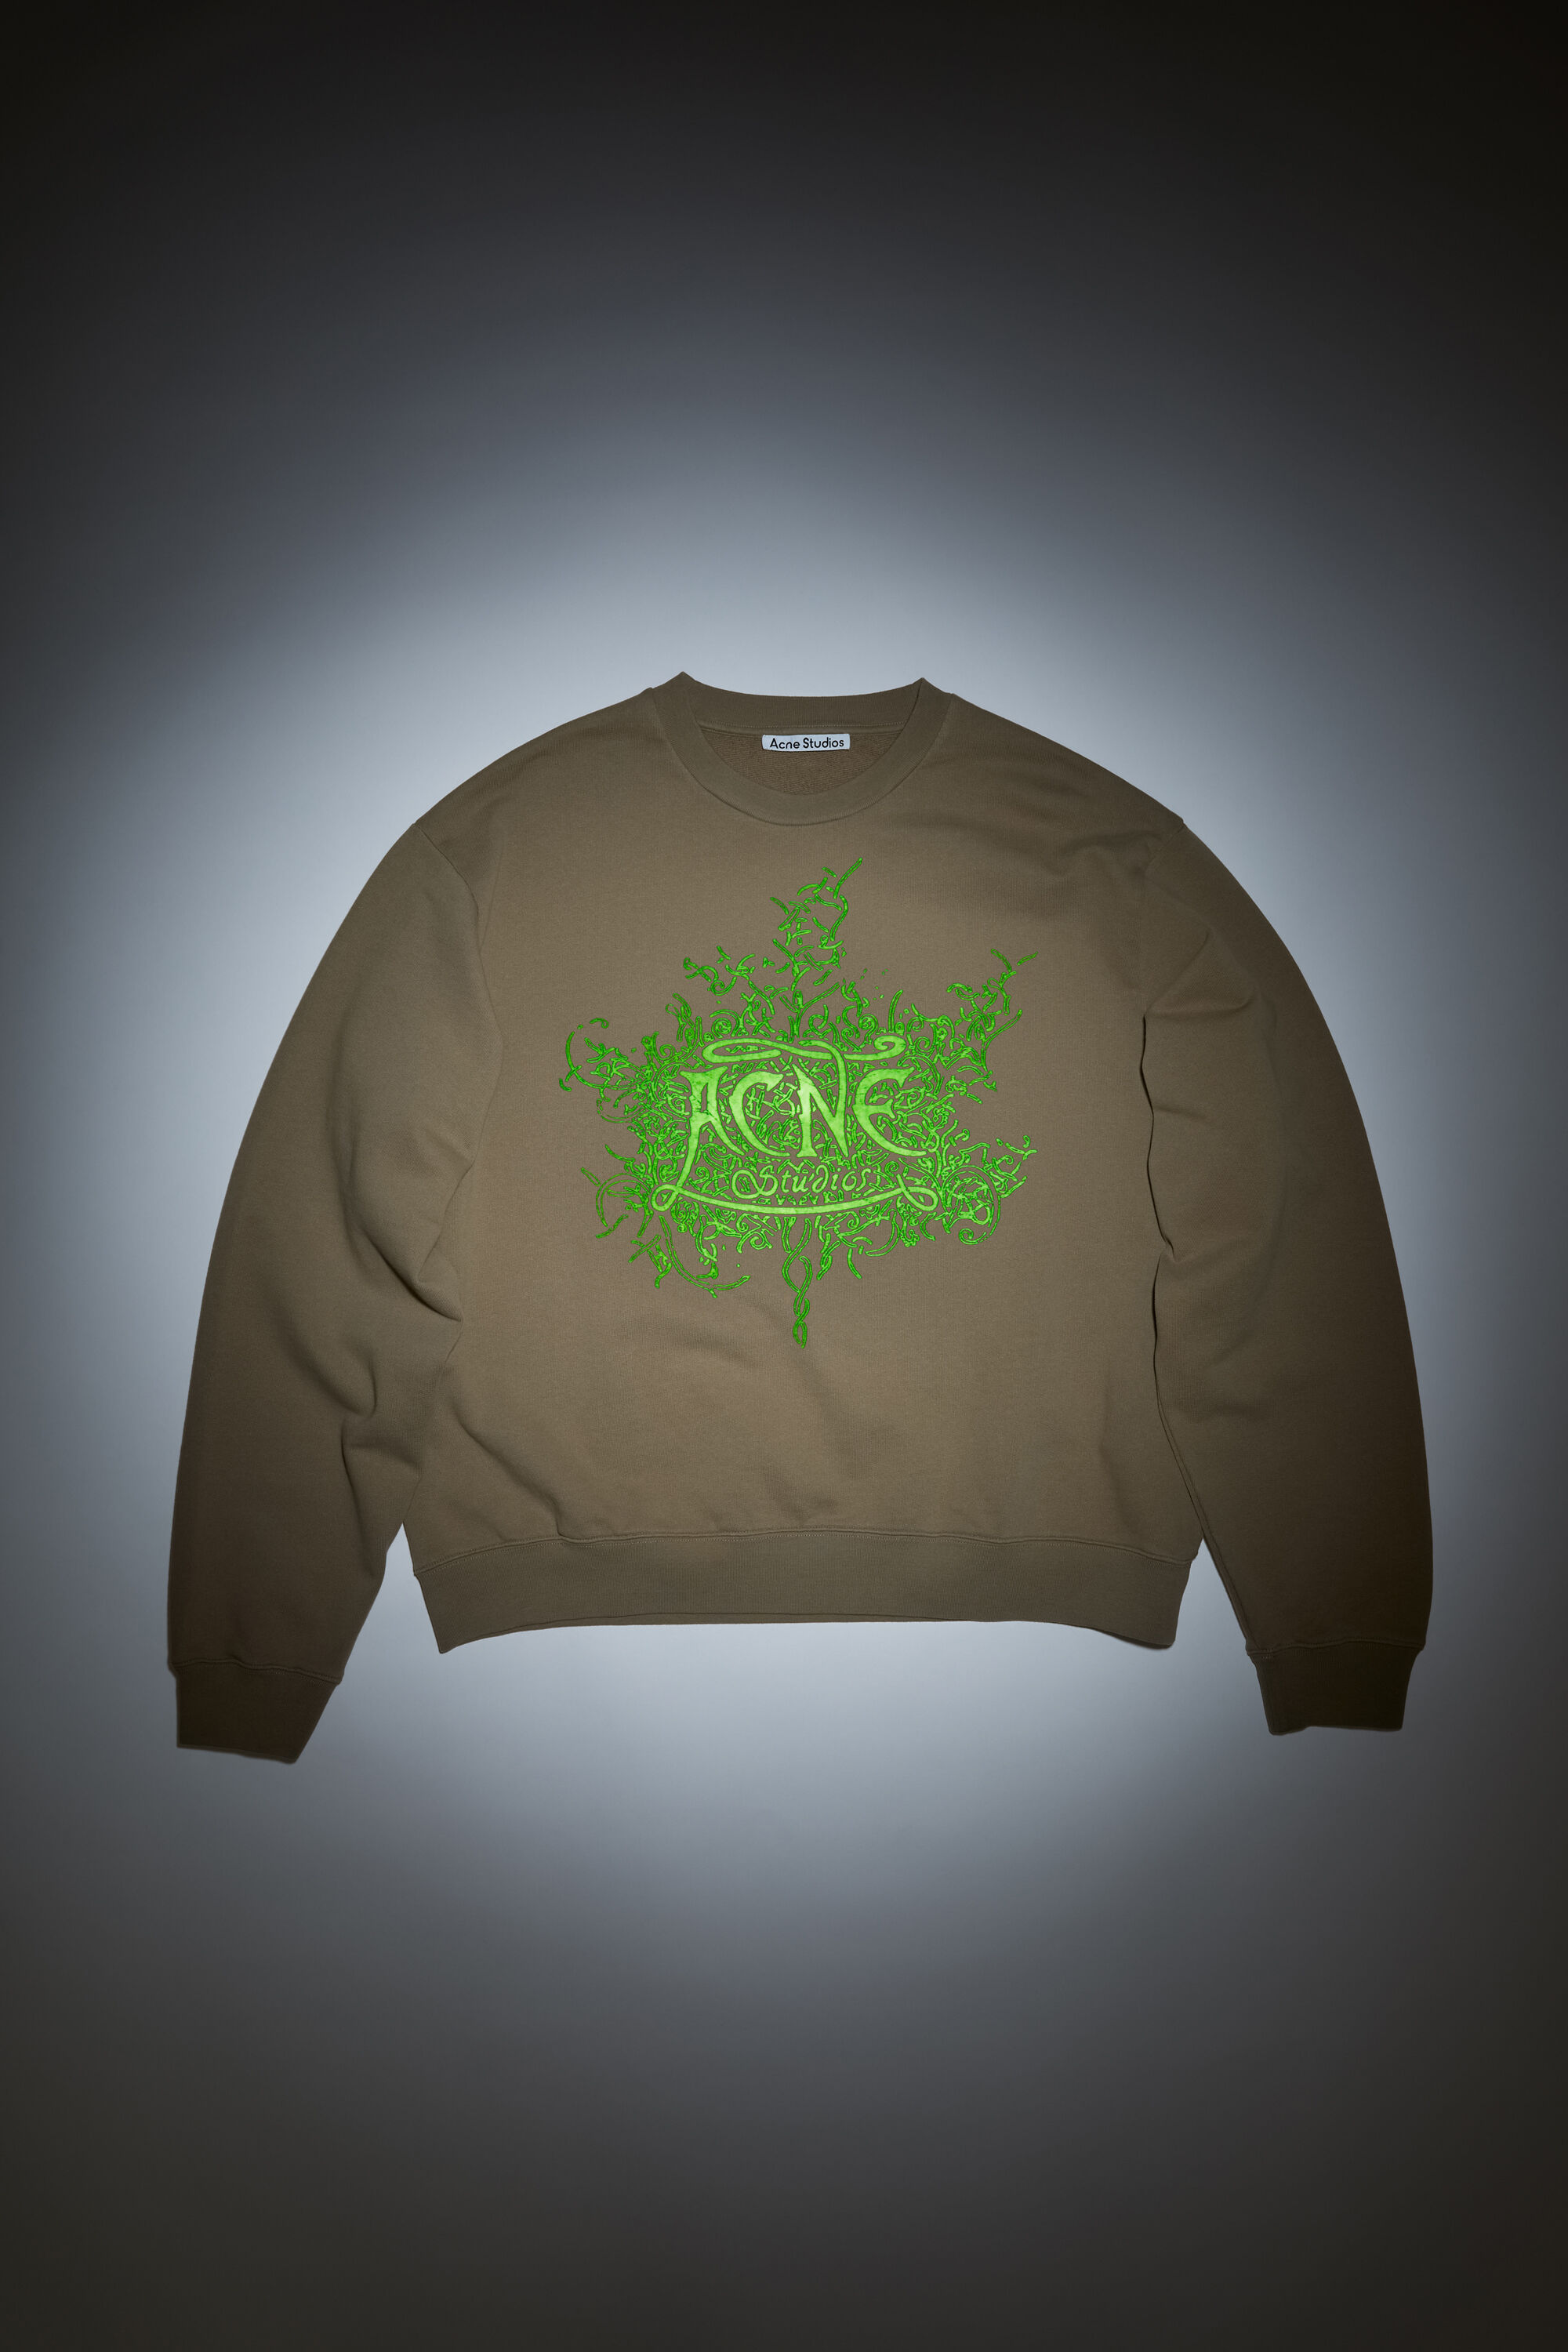 Acne Studios - Glow in the dark logo sweater - Dark beige